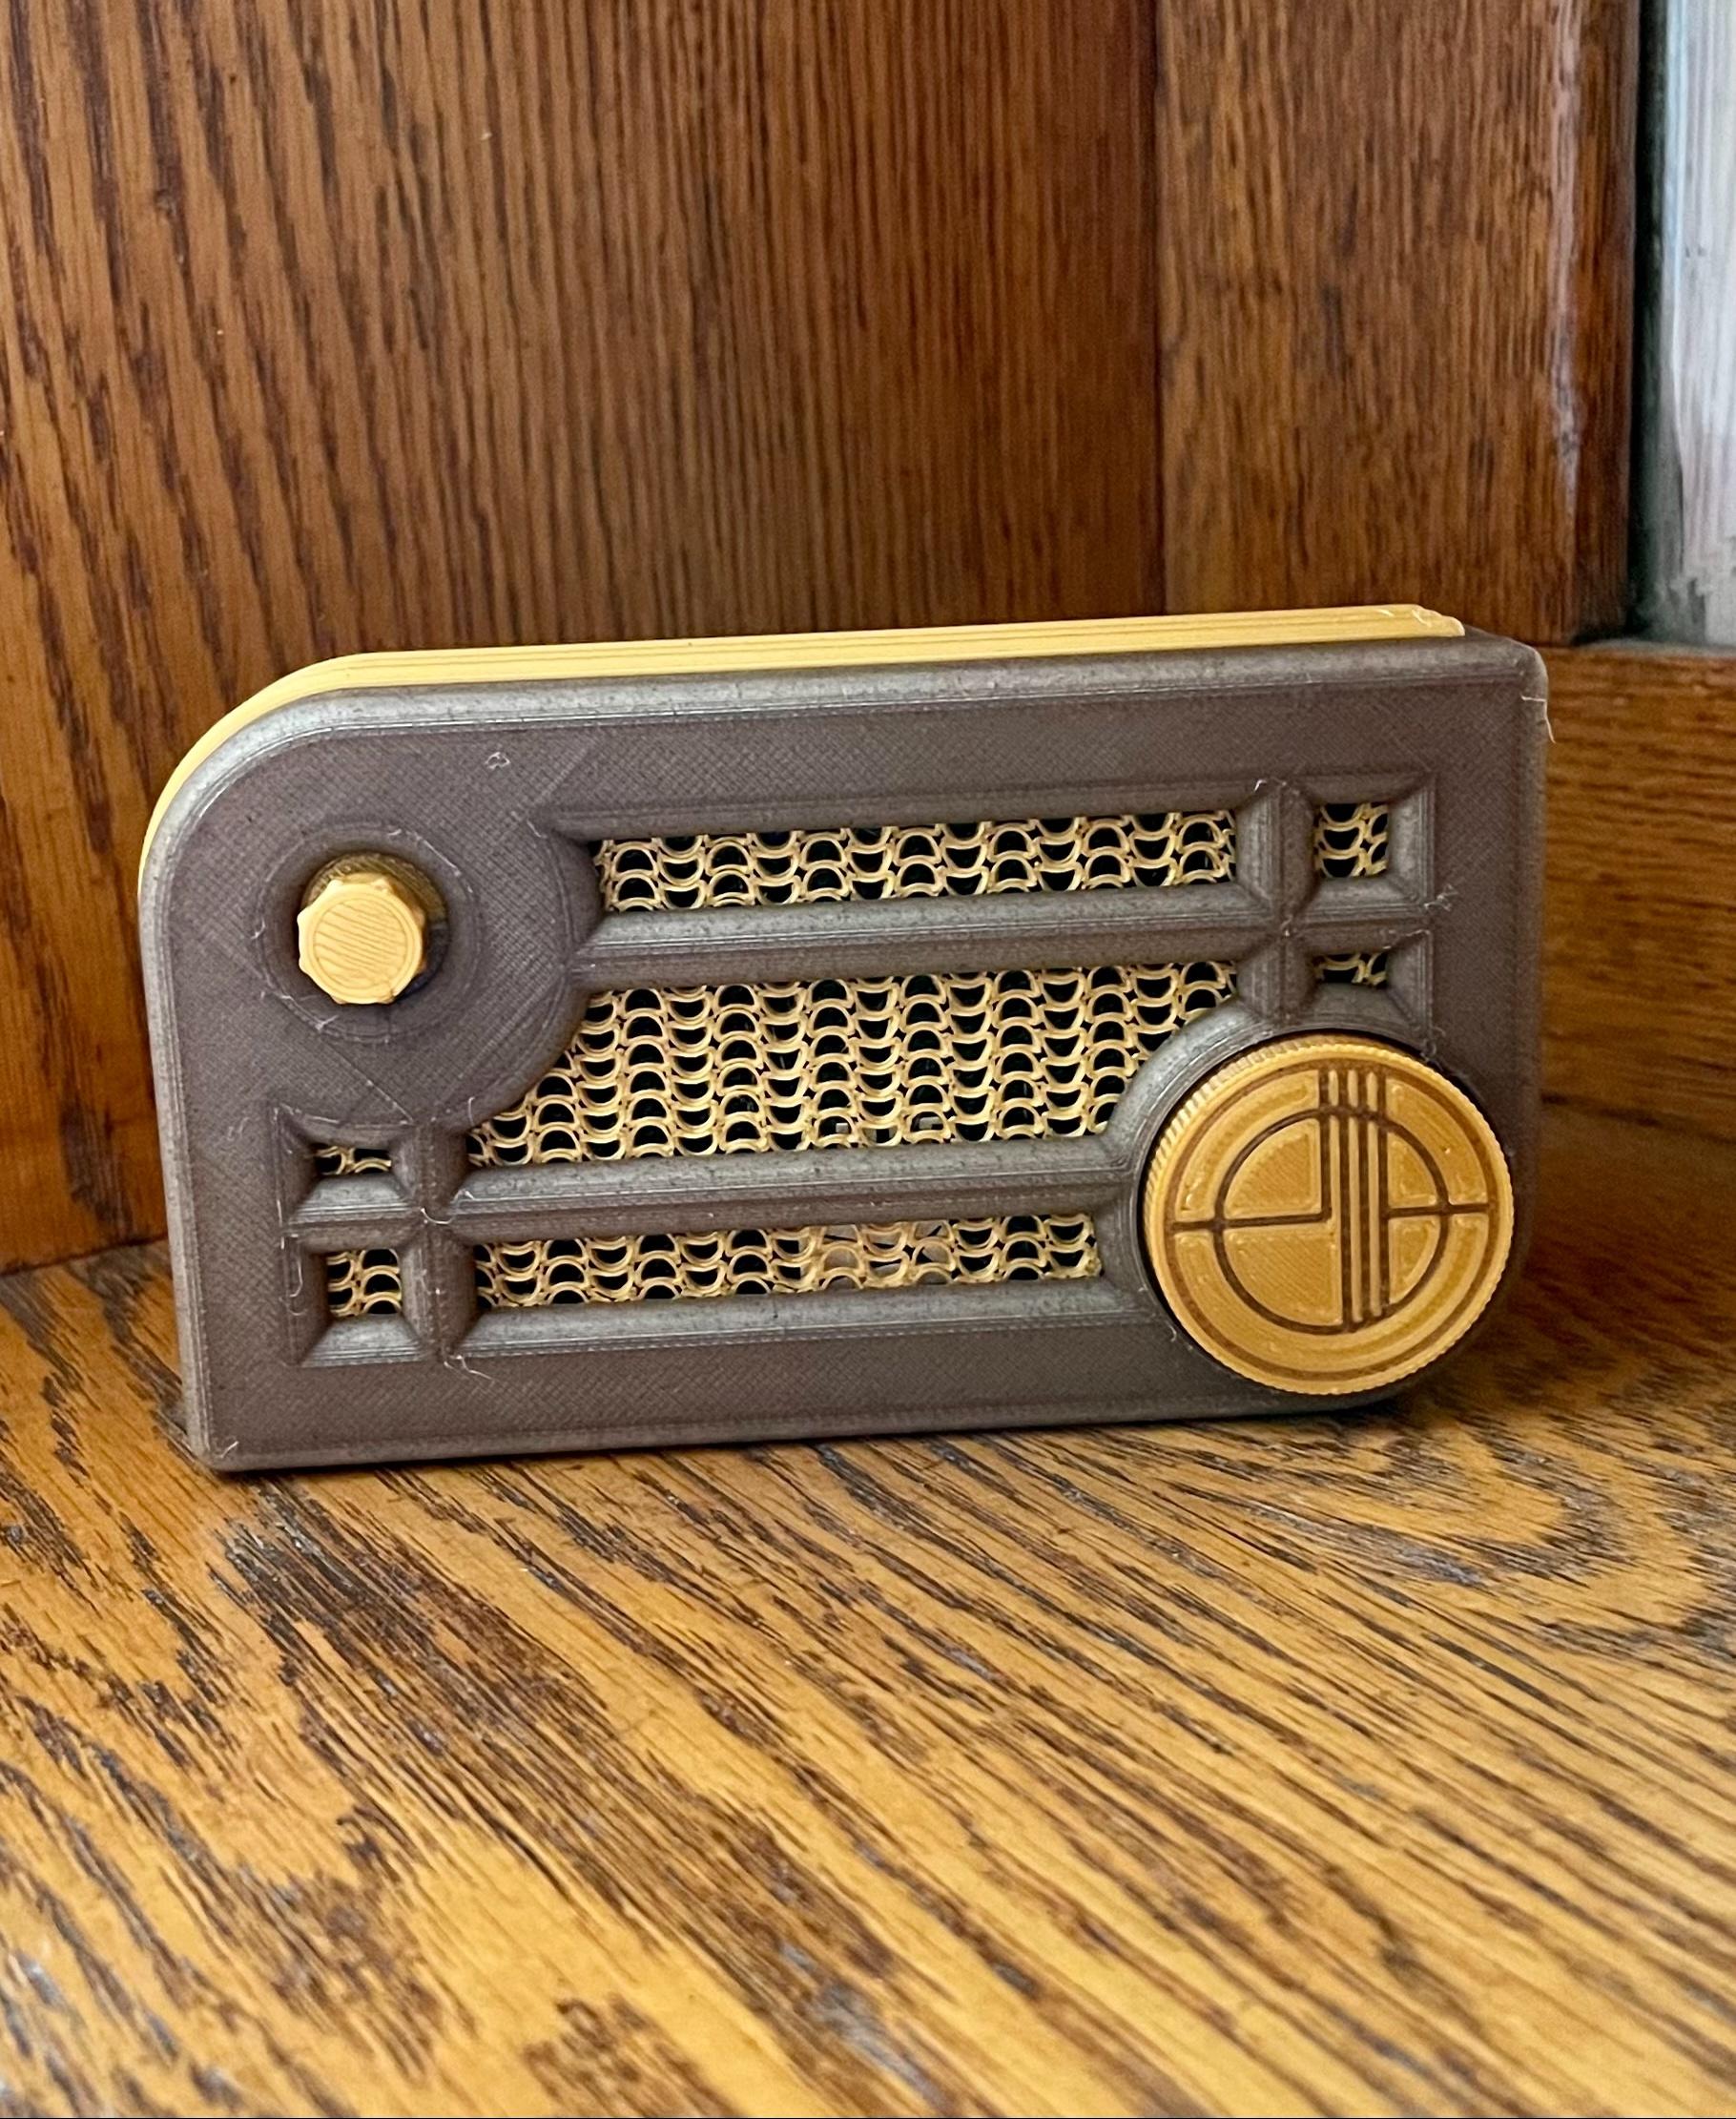 1938 Radio Bluetooth Speaker Case - Protopasta 2023 Holiday Pine and Protopasta What Karat? Smooth Gold. - 3d model